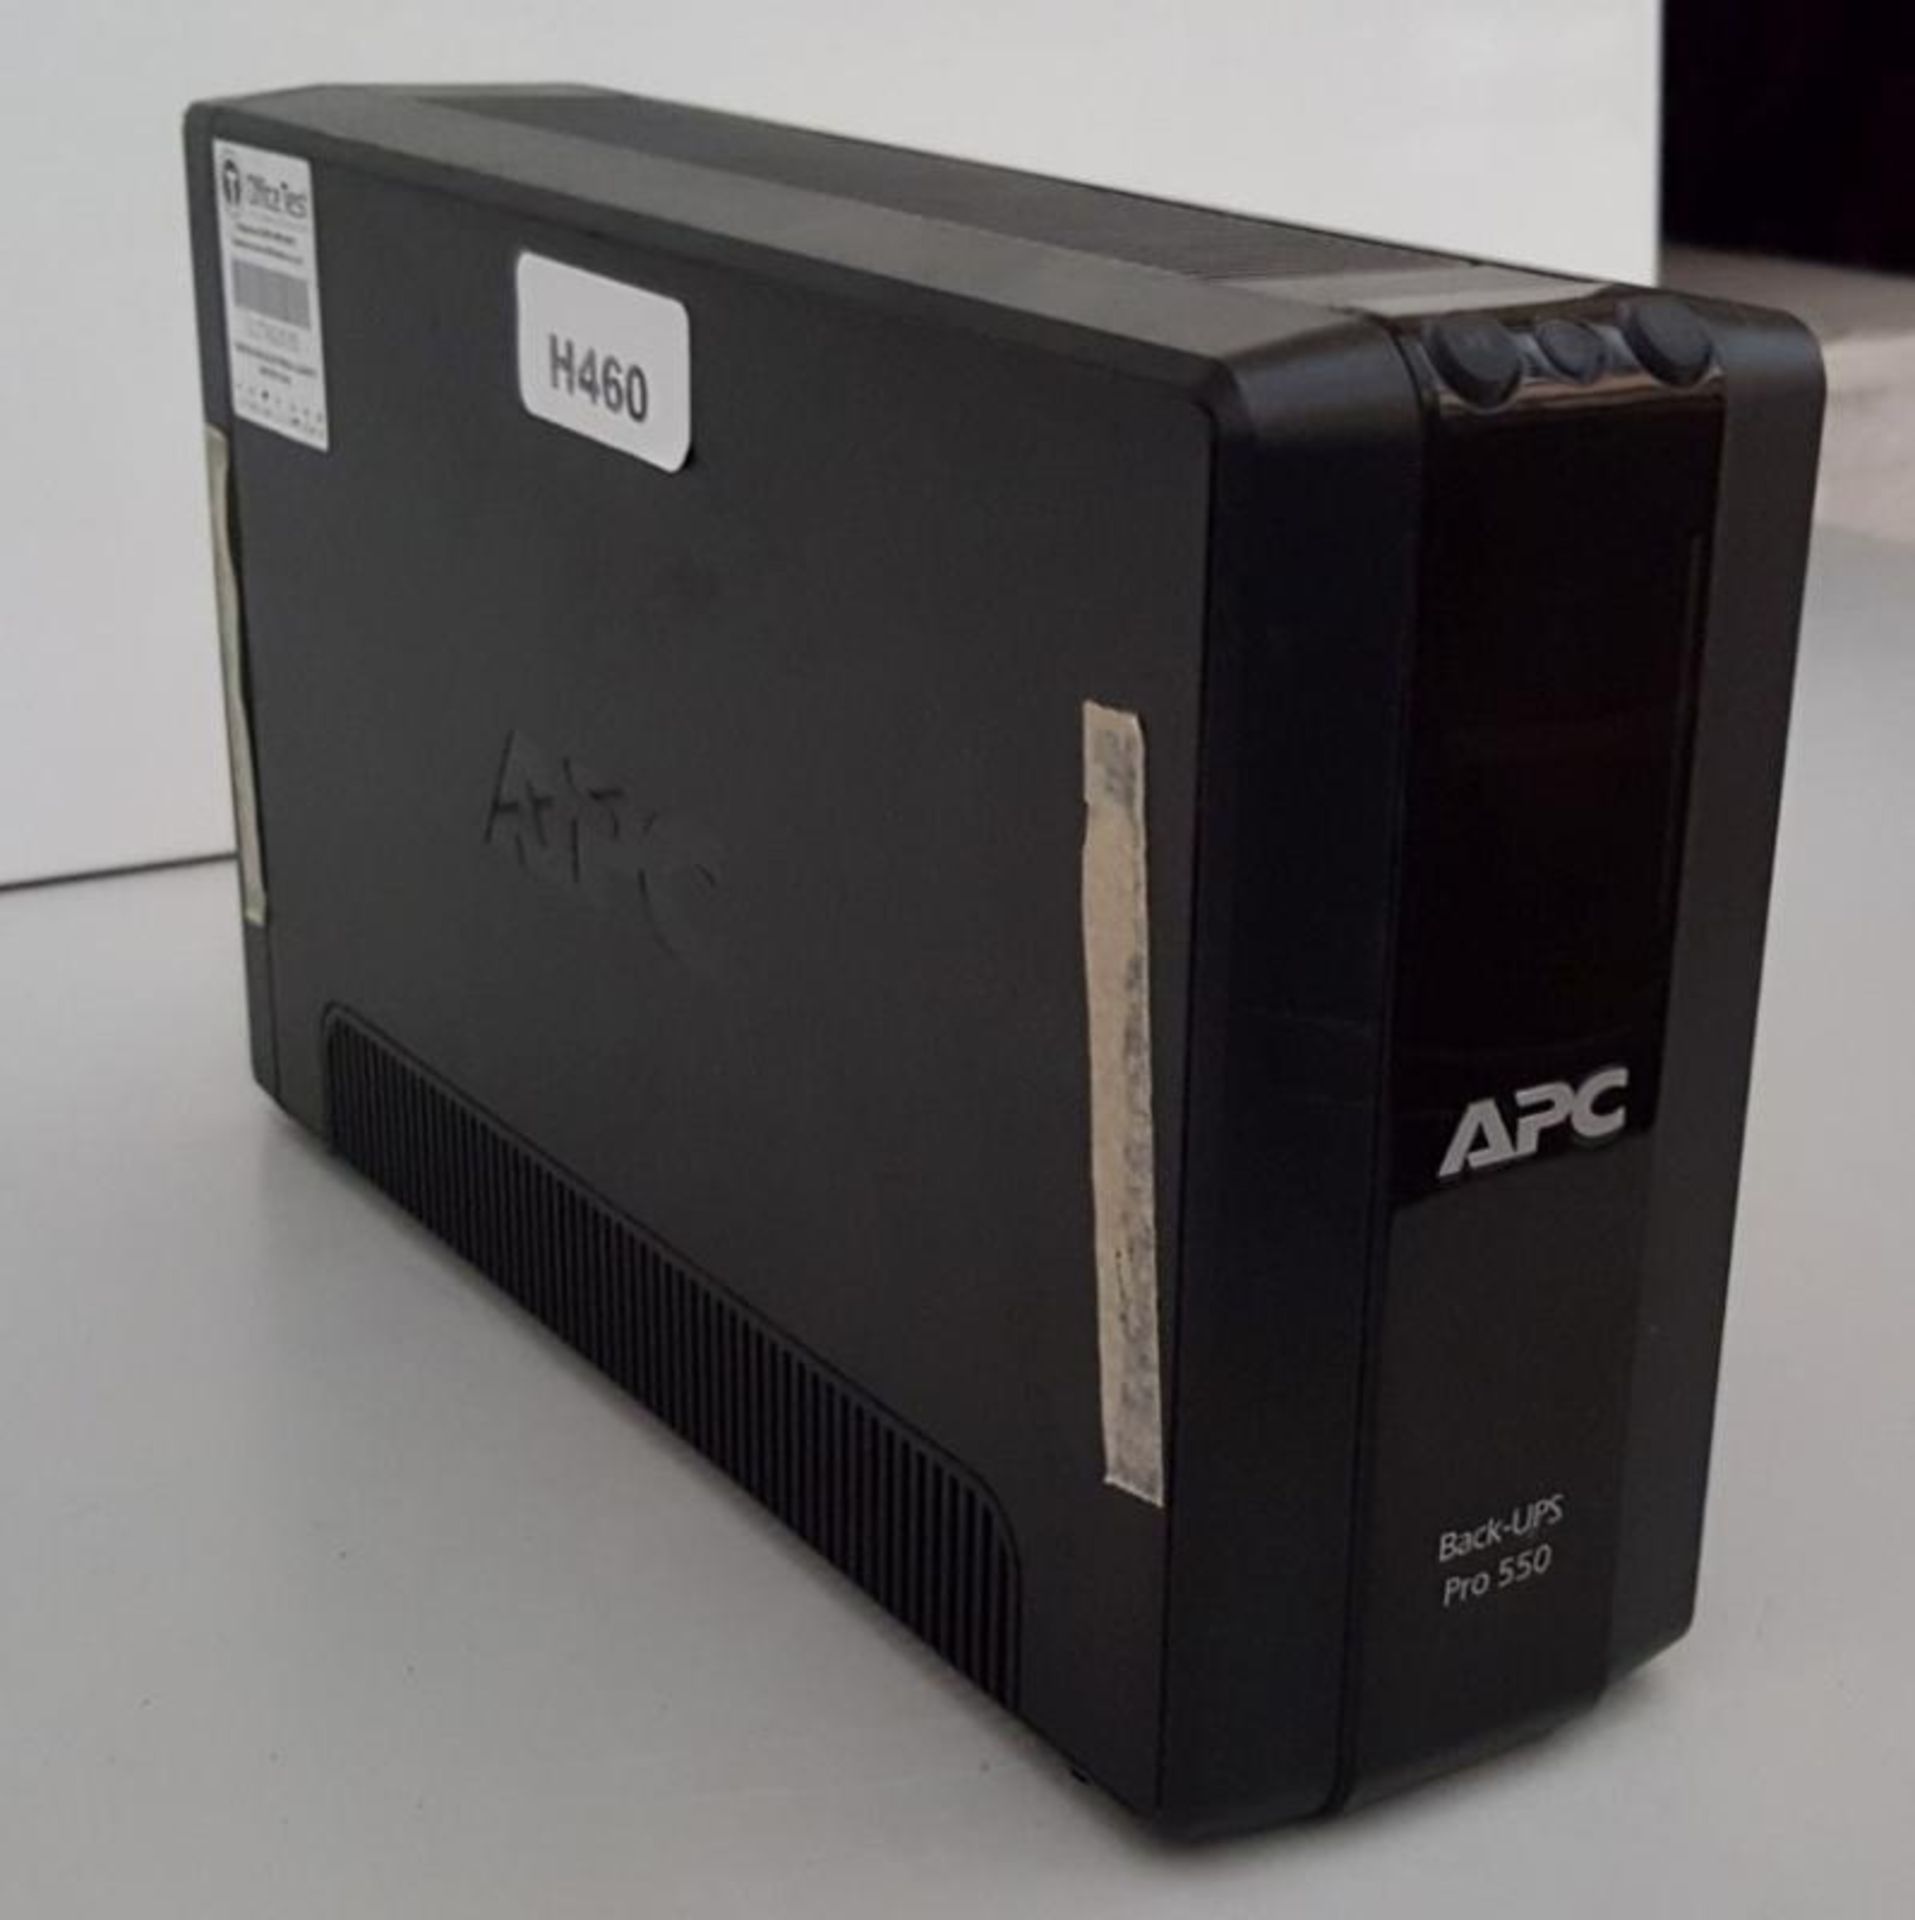 1 x APC Power-Saving Back-UPS PRO BR550 - Ref H460 - CL011 - Location: Altrincham WA14 As pe - Image 3 of 5